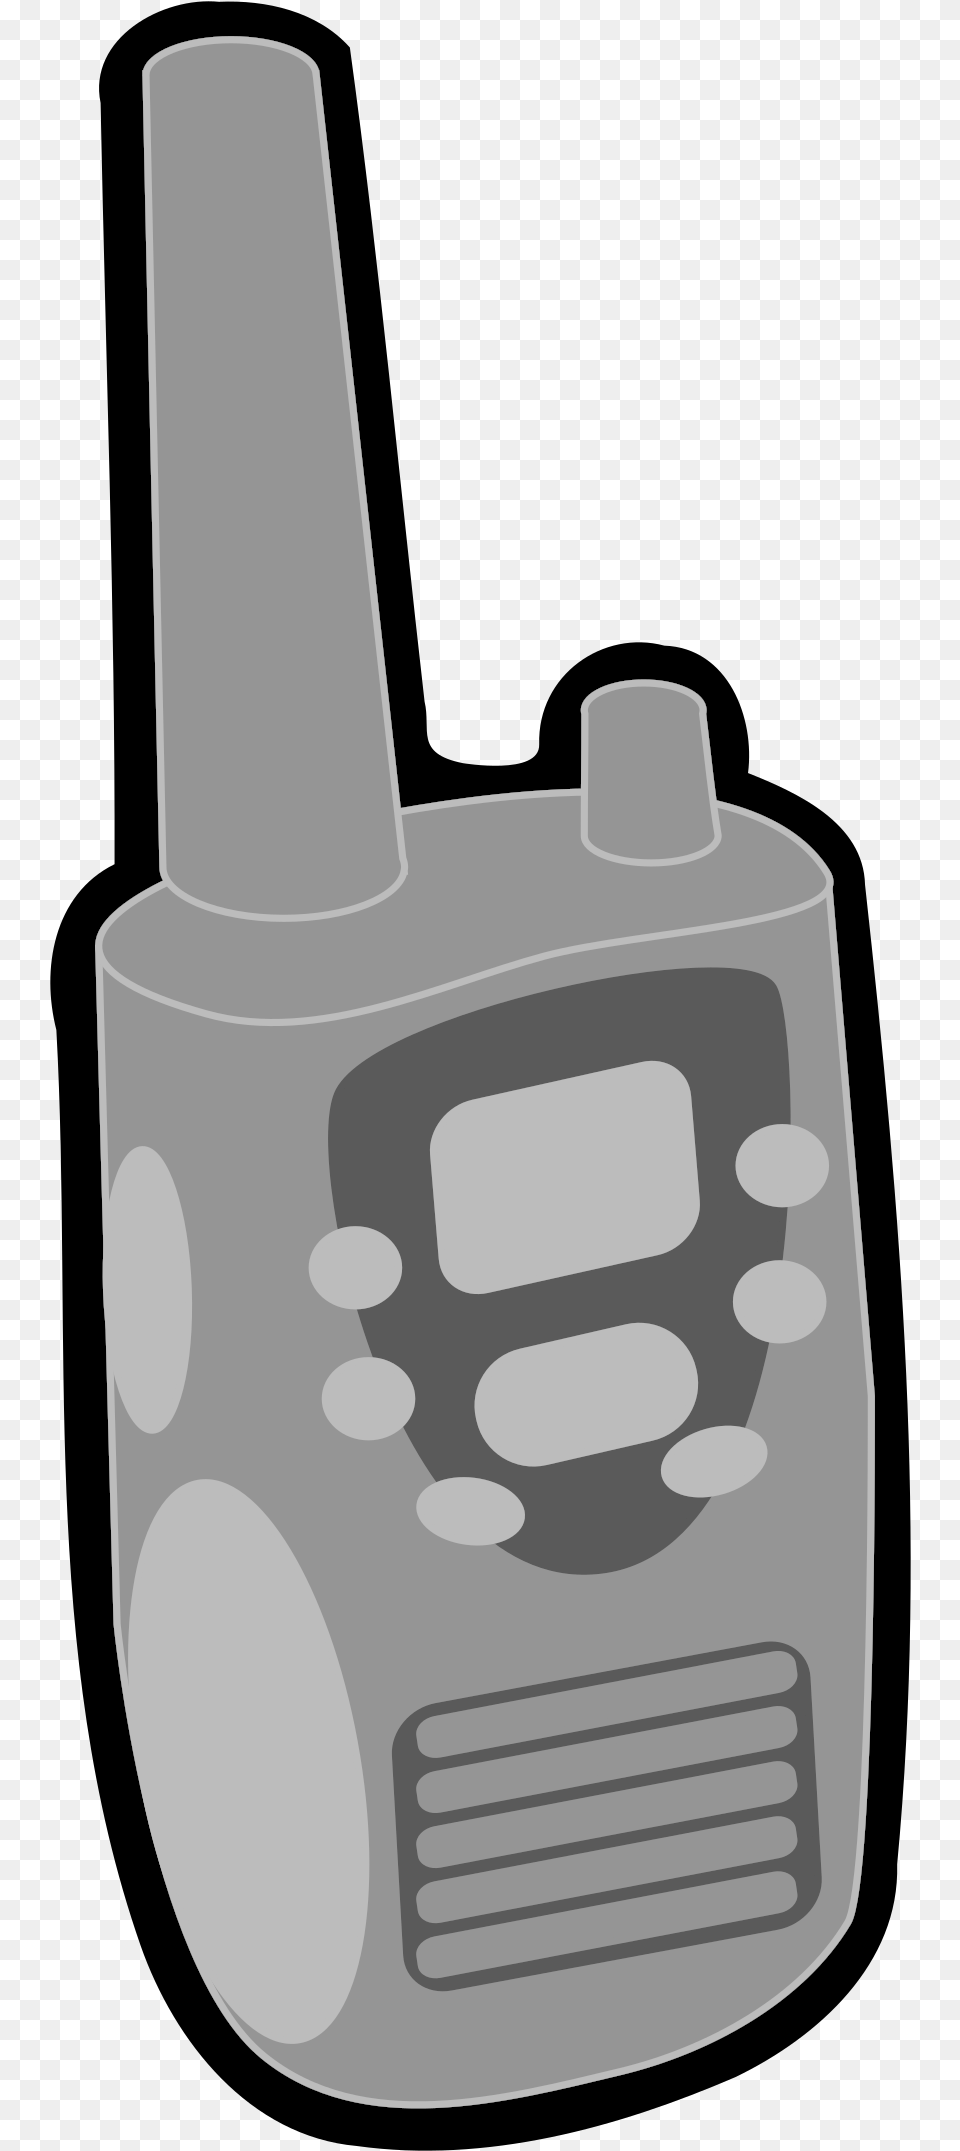 This Icons Design Of Walkie Talkie, Electronics, Radio, Bottle, Shaker Free Png